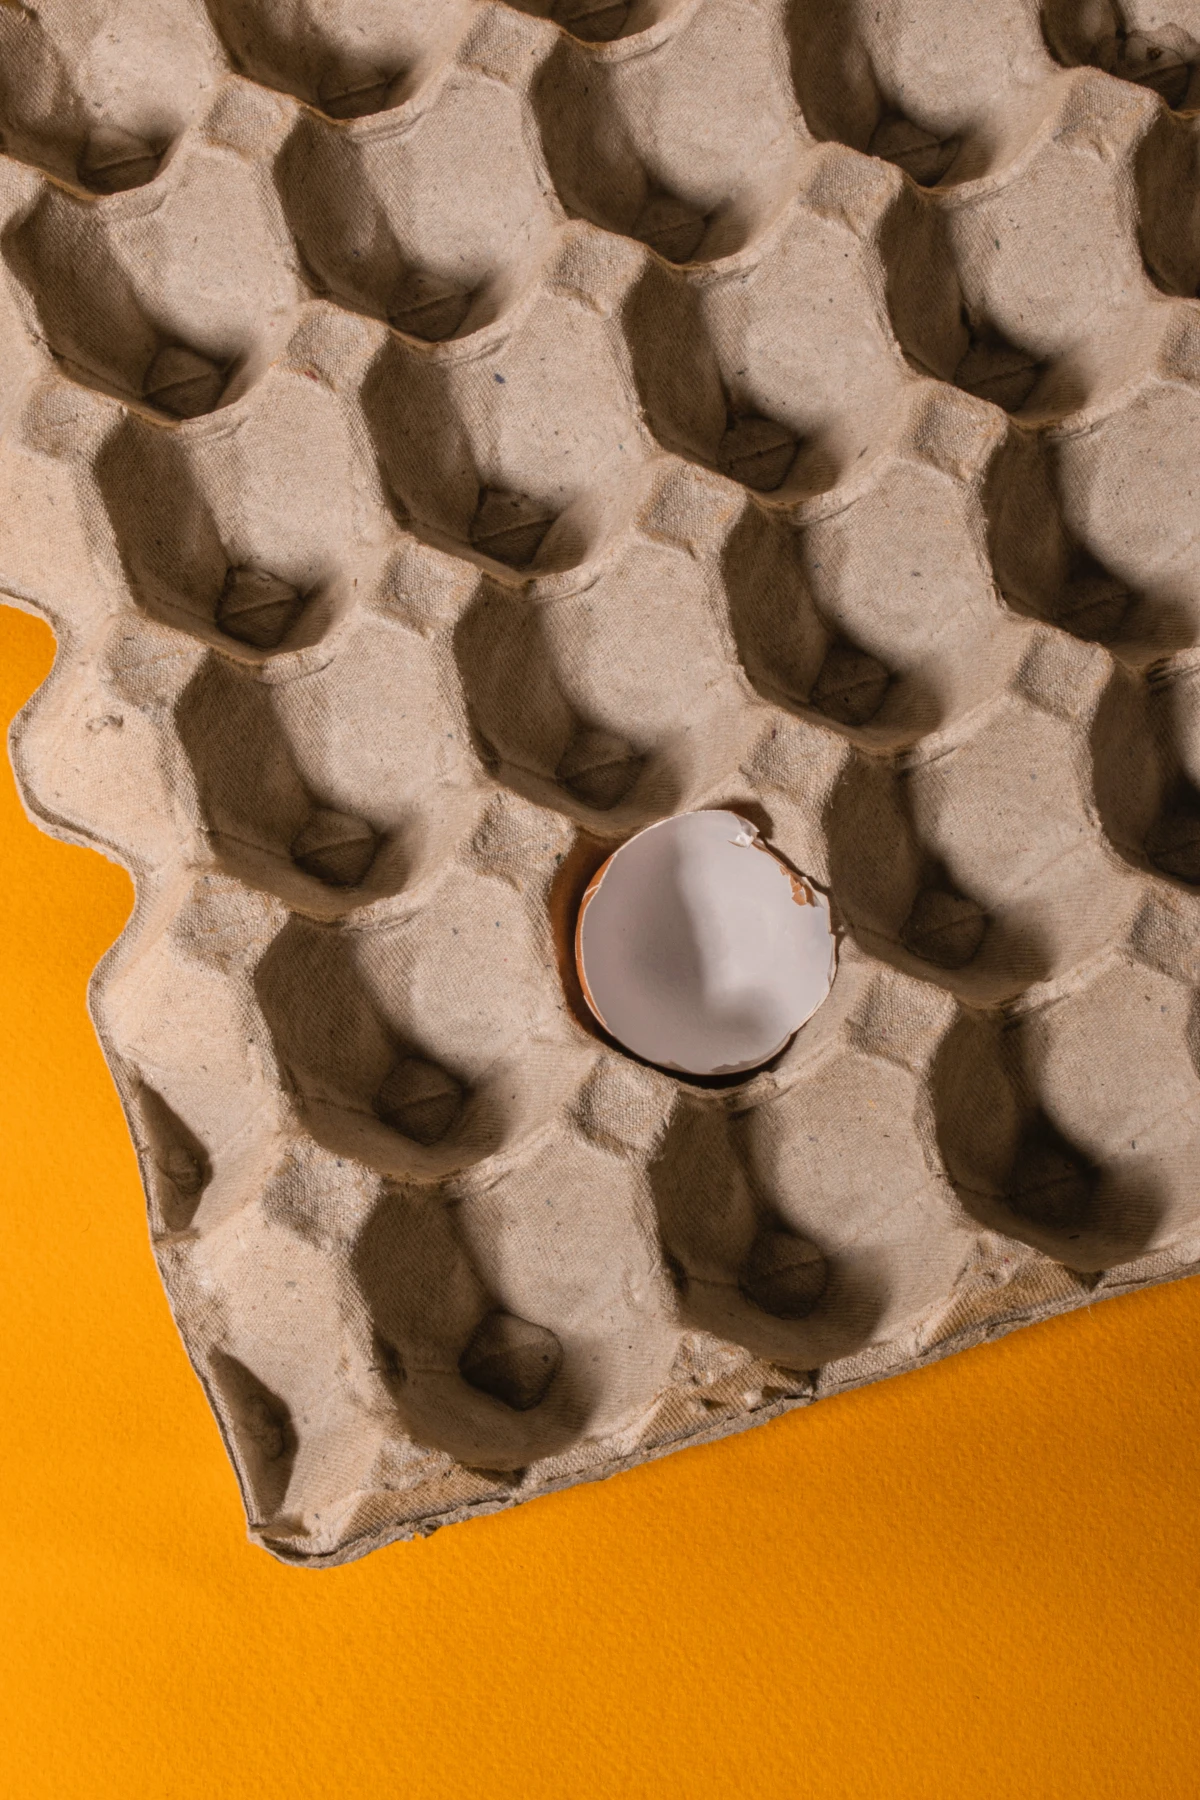 ways to reuse egg cartons empty egg carton on yellow background